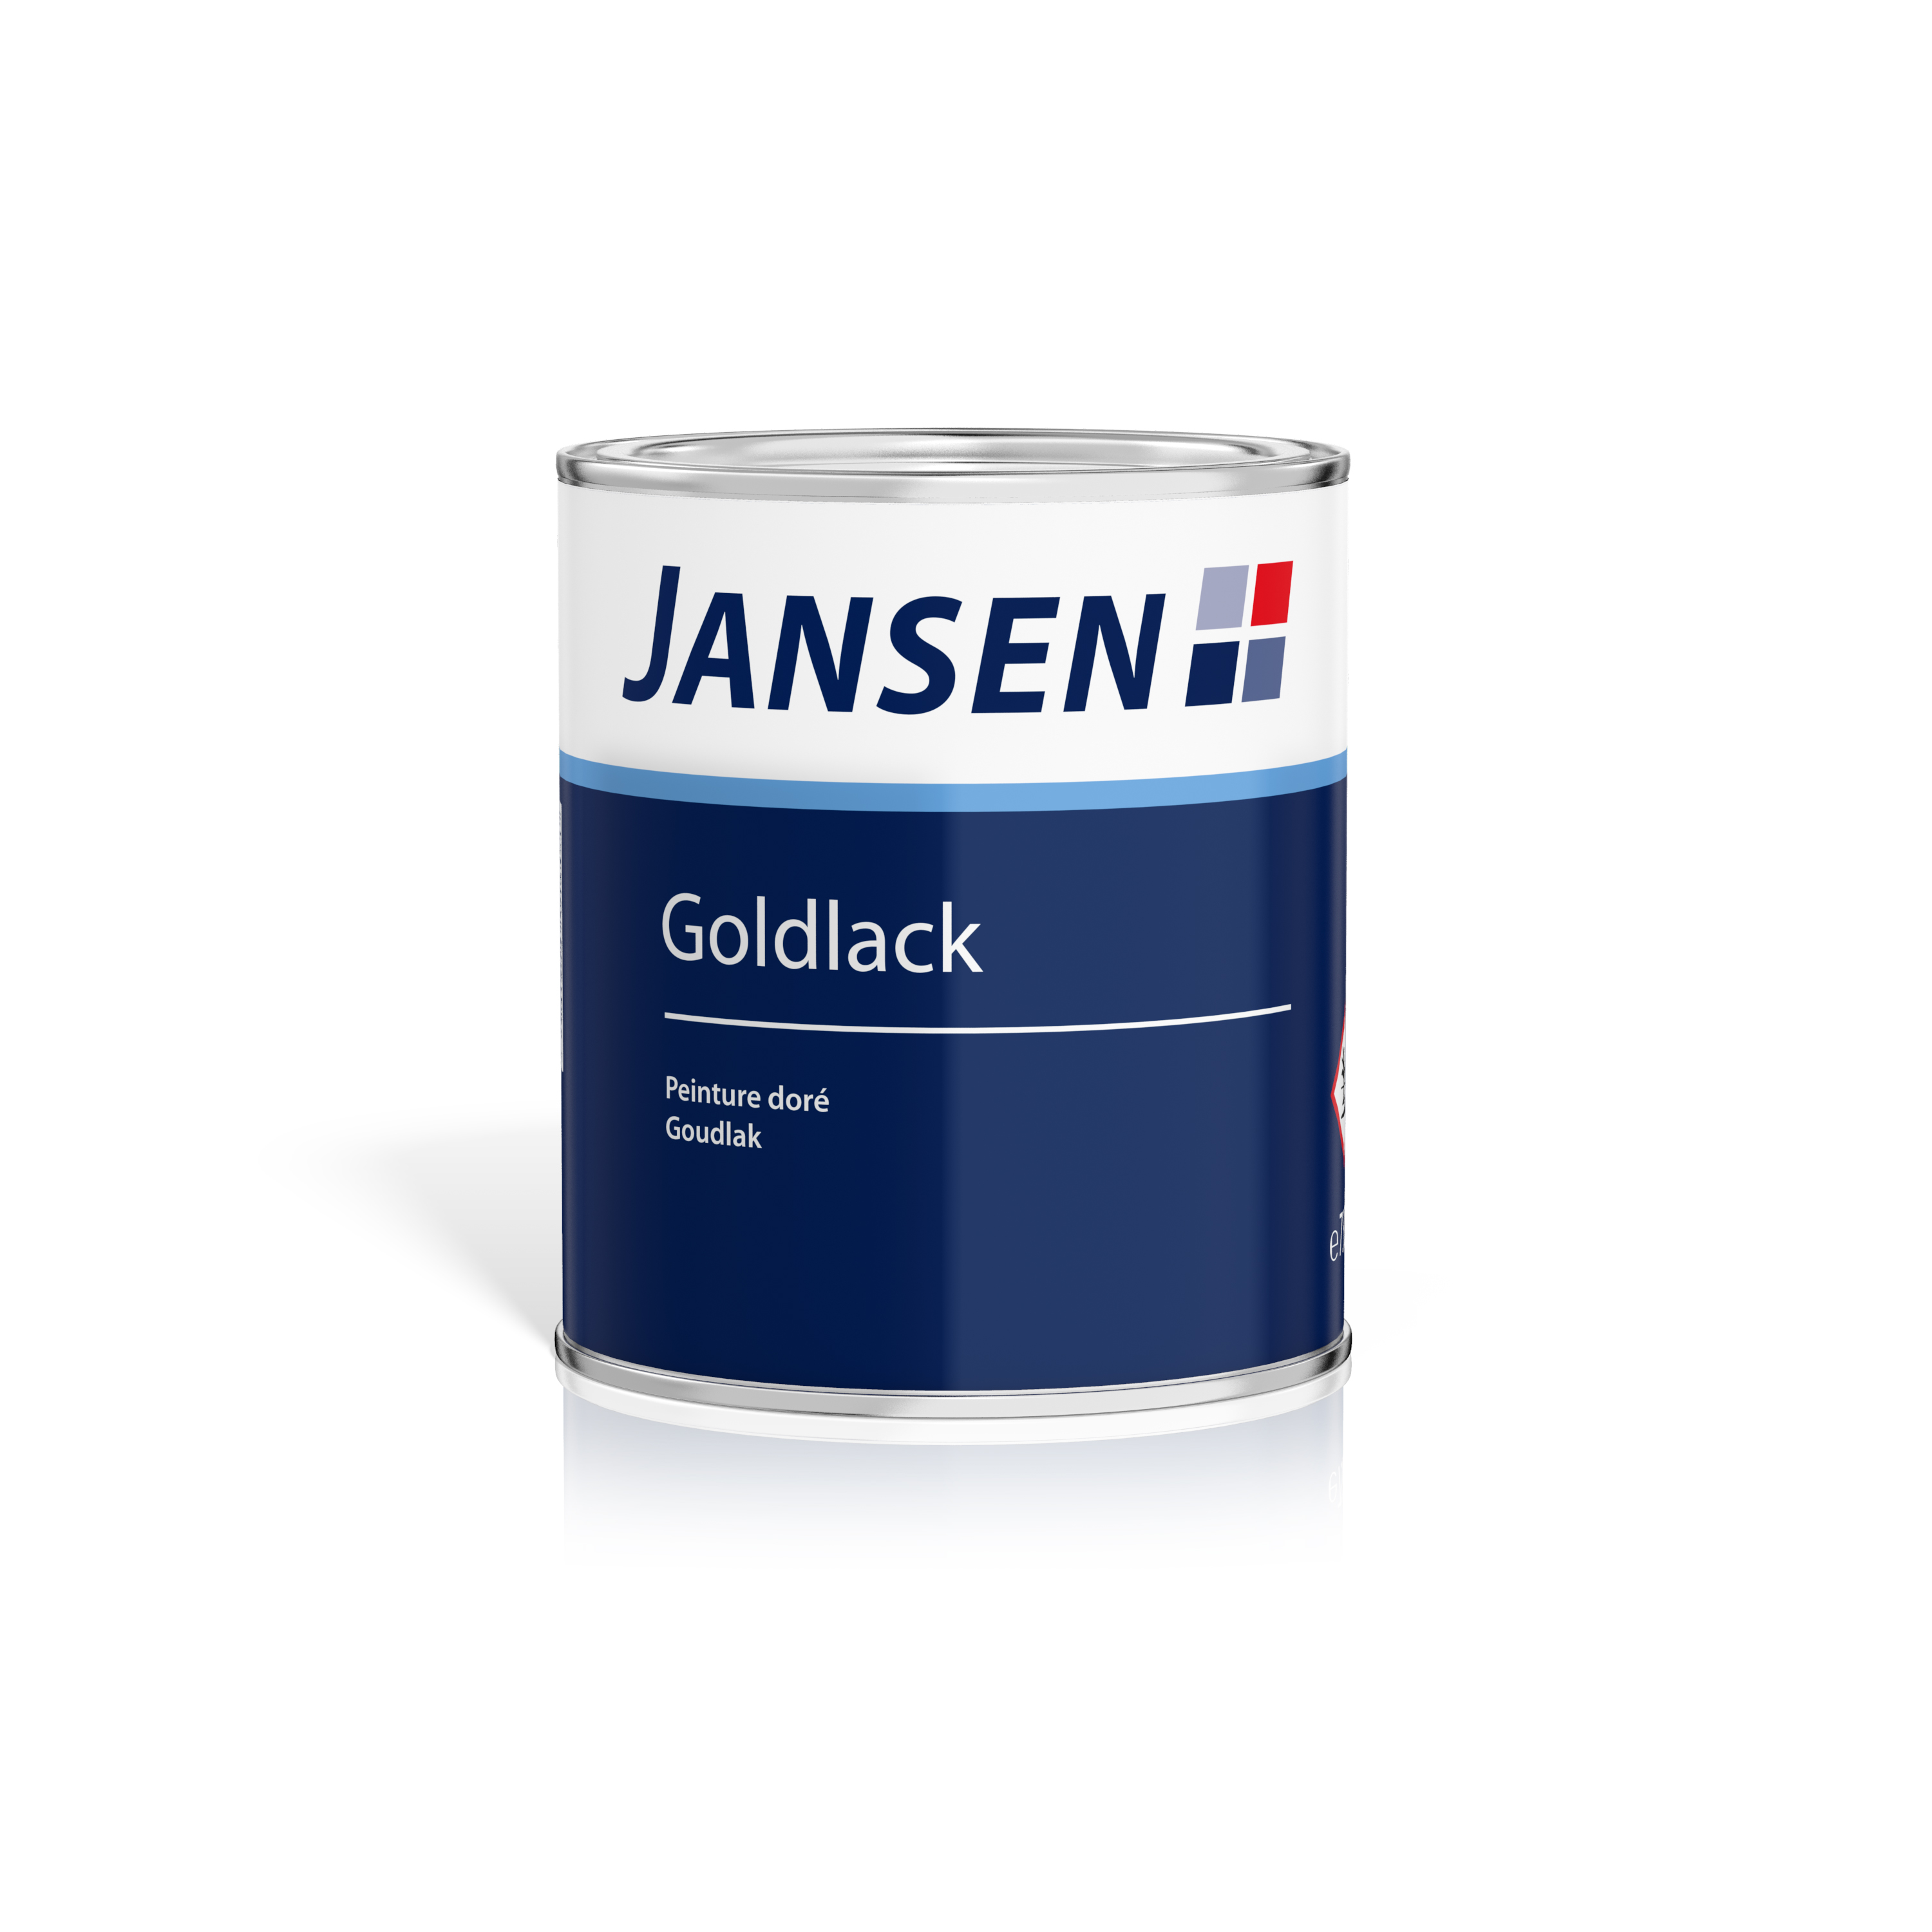 Jansen Goldlack